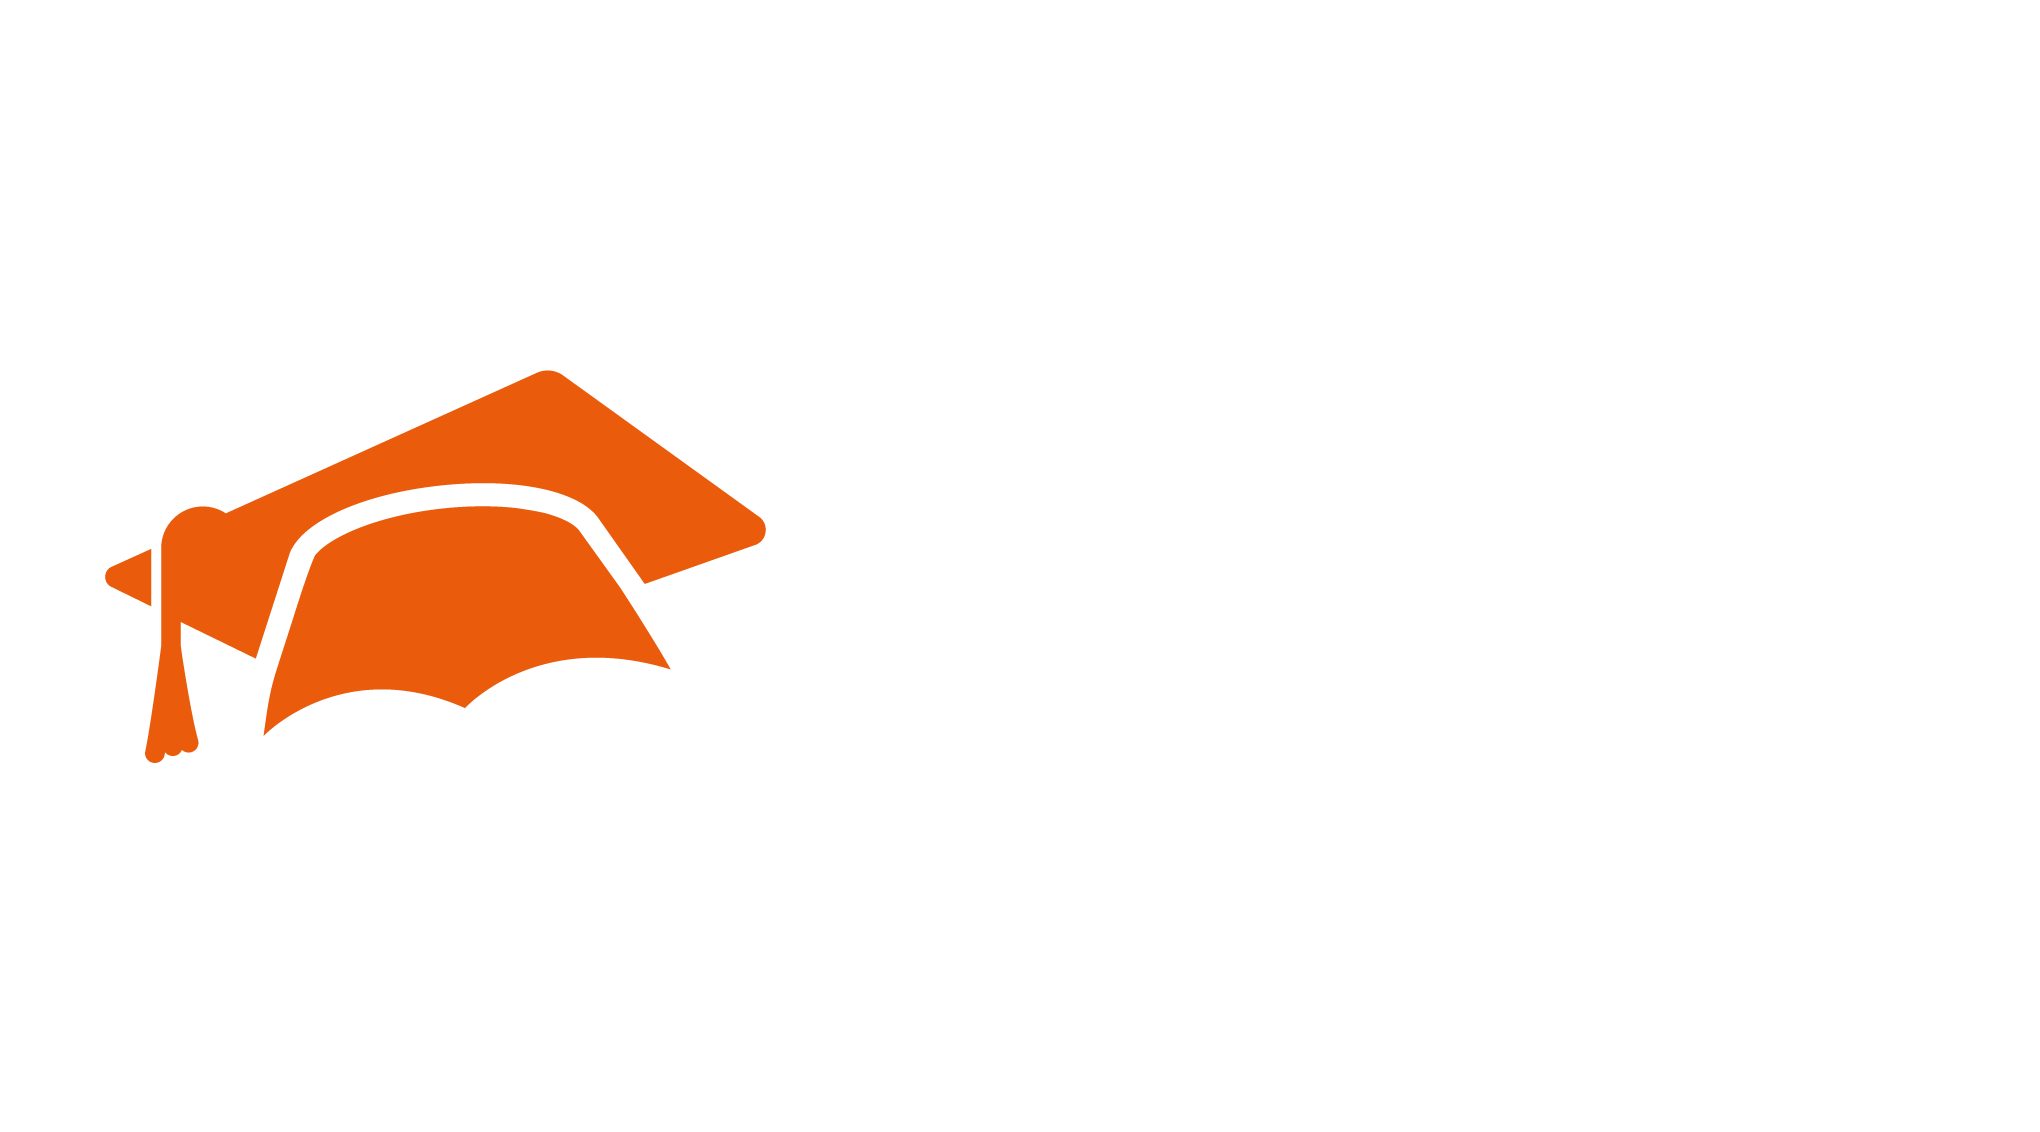 Education Estates